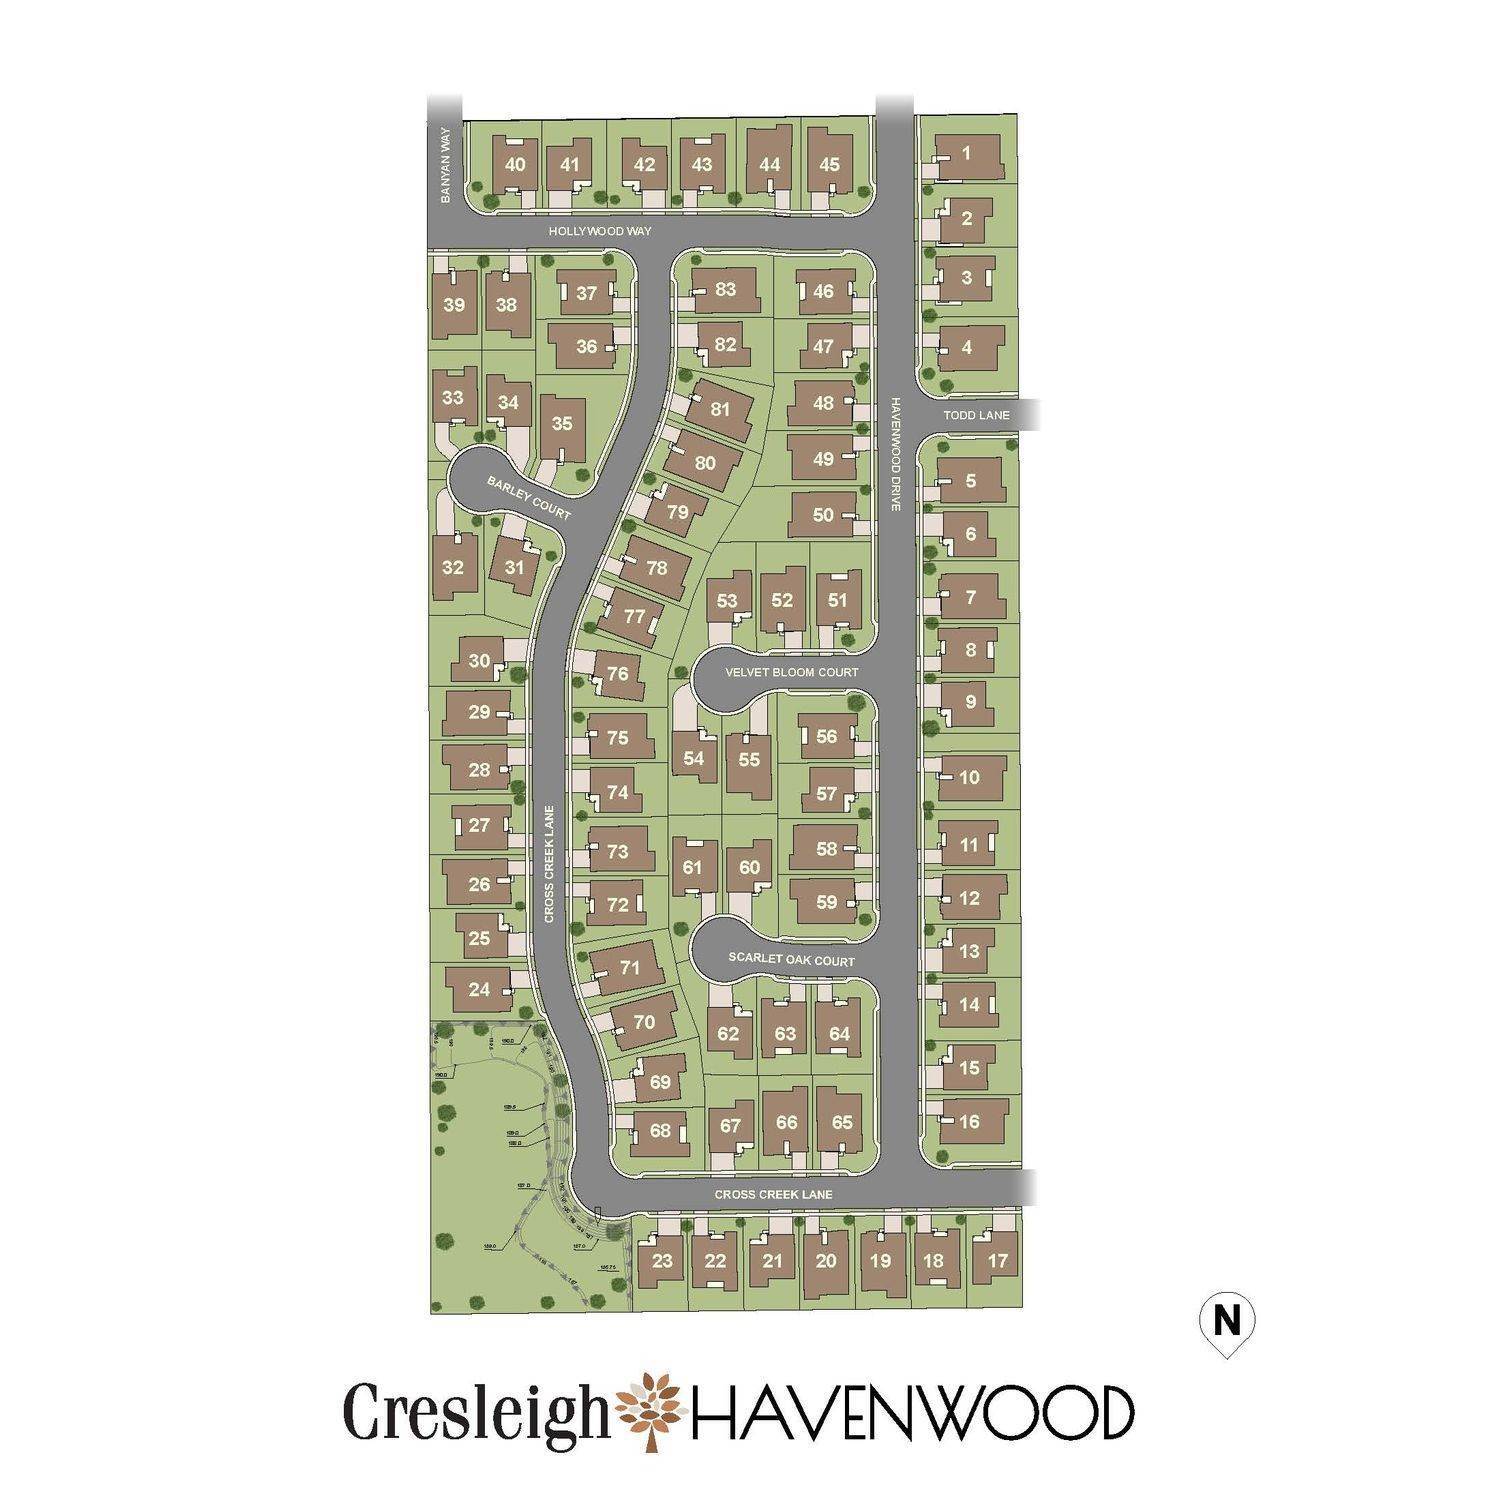 2. Cresleigh Havenwood建于 758 Havenwood Drive, Lincoln, CA 95648